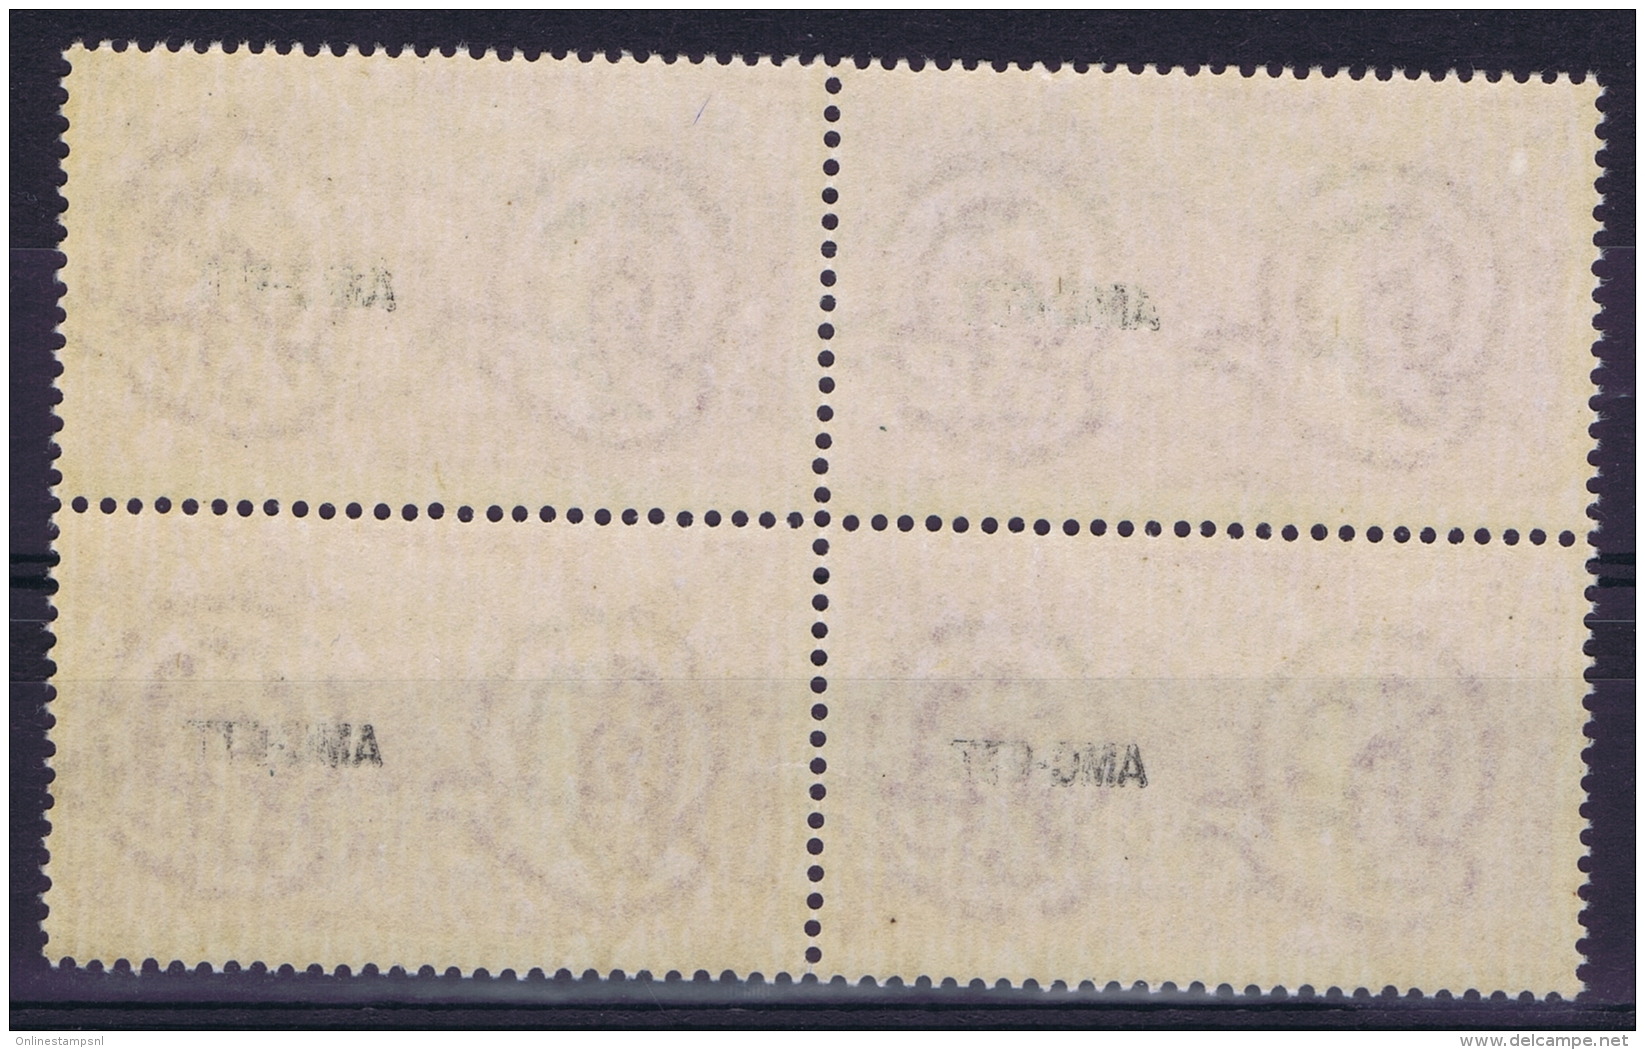 Italy  AMG FTT  Sa 7 Postfrisch/neuf Sans Charniere /MNH/** 1951  In 4 Block  1951 - Eilsendung (Eilpost)